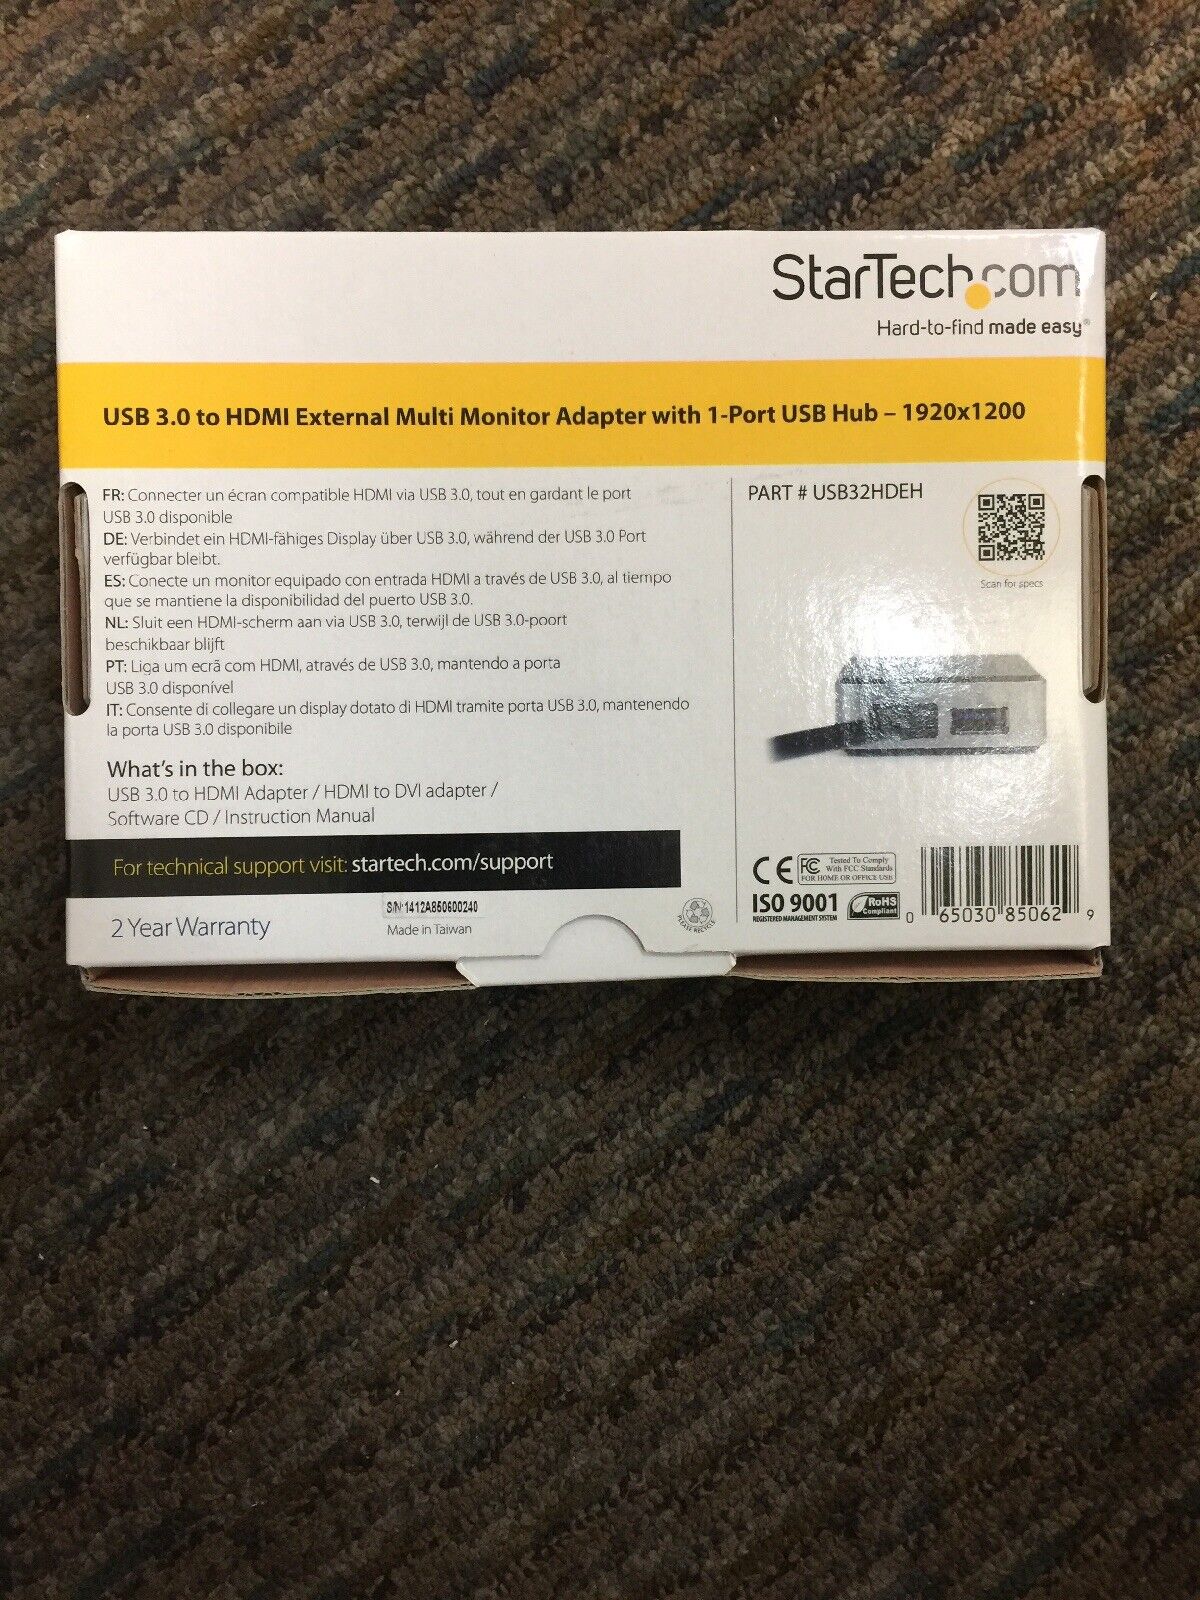 StarTech Video Card Multi-Monitor Adapter - USB 3.0 to HDMI (USB32HDEH) NEW NIB